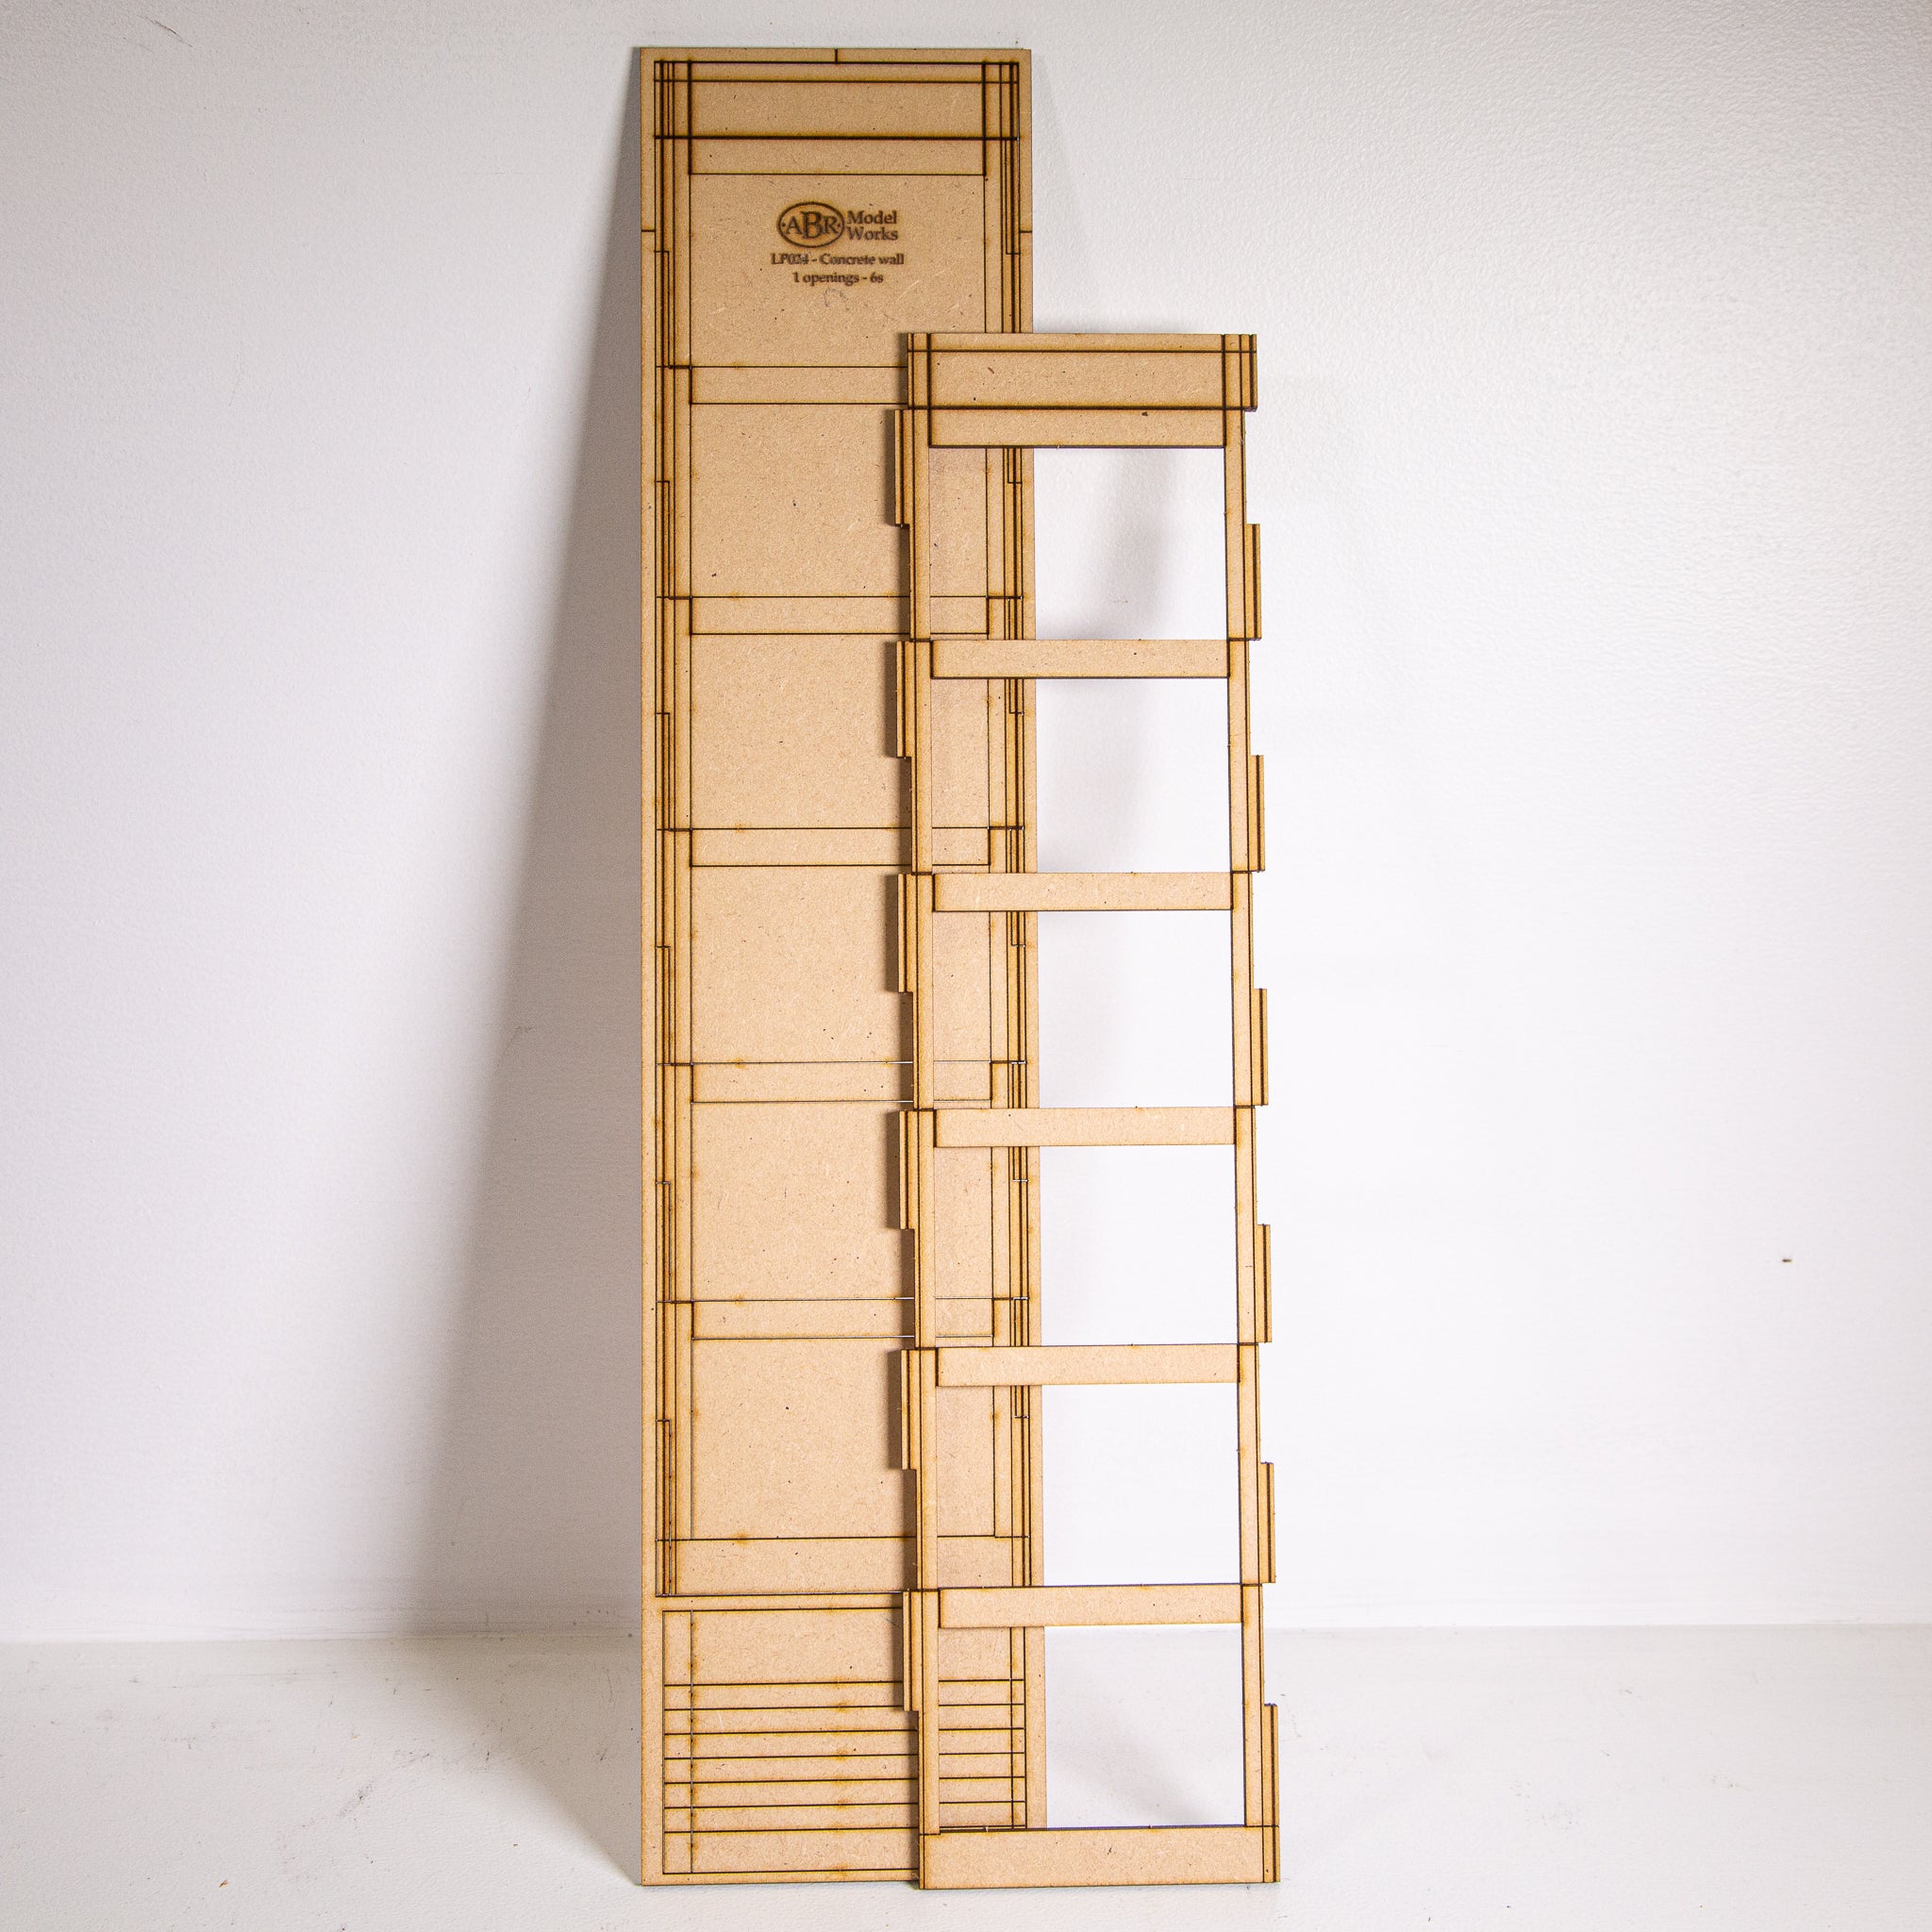 LP024 - HO Scale - Concrete modular model wall panel 1 opening per storey, 6 storey